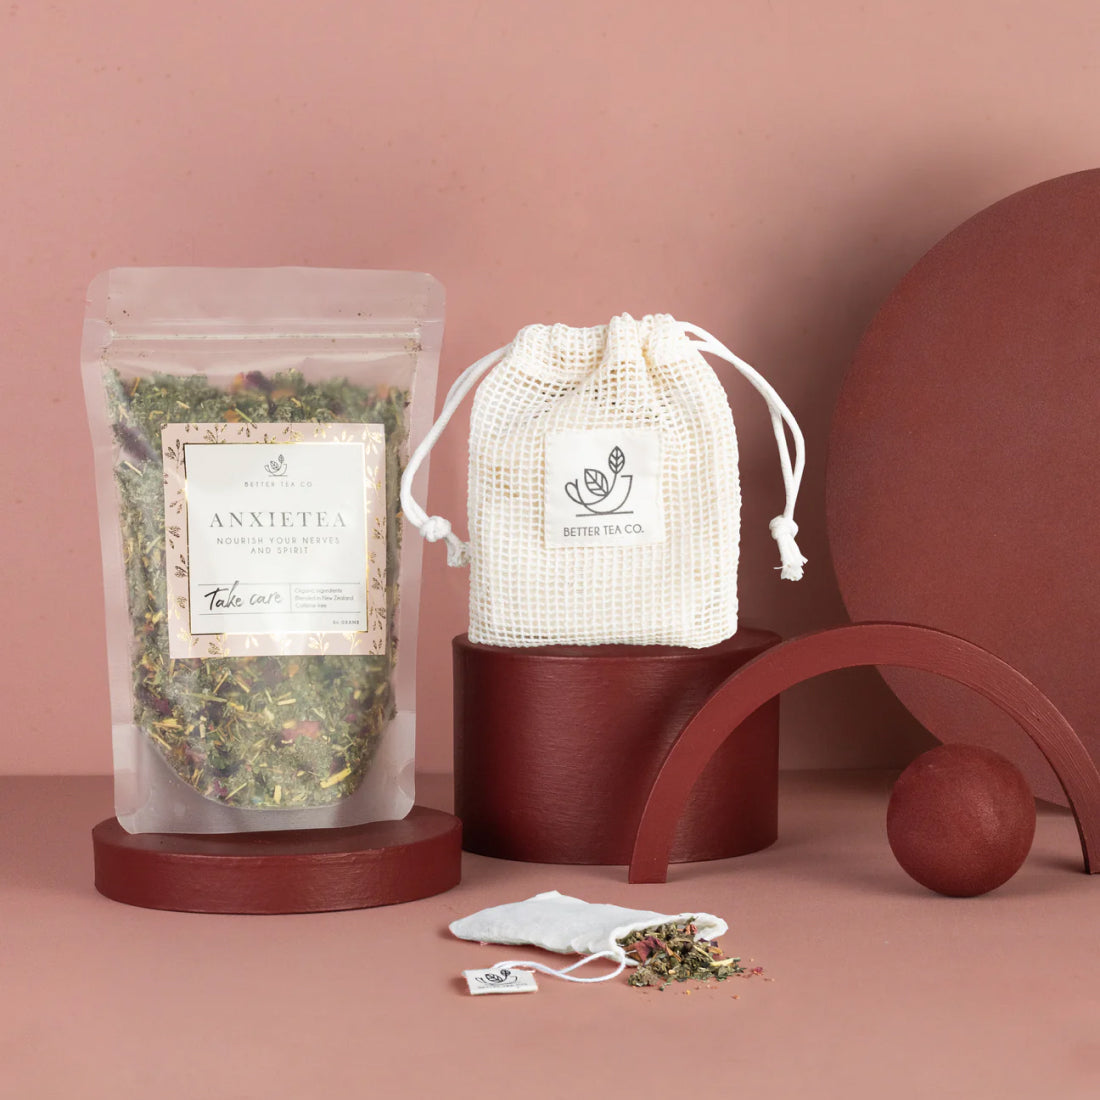 A bag of Anxietea tea and reusable teabags